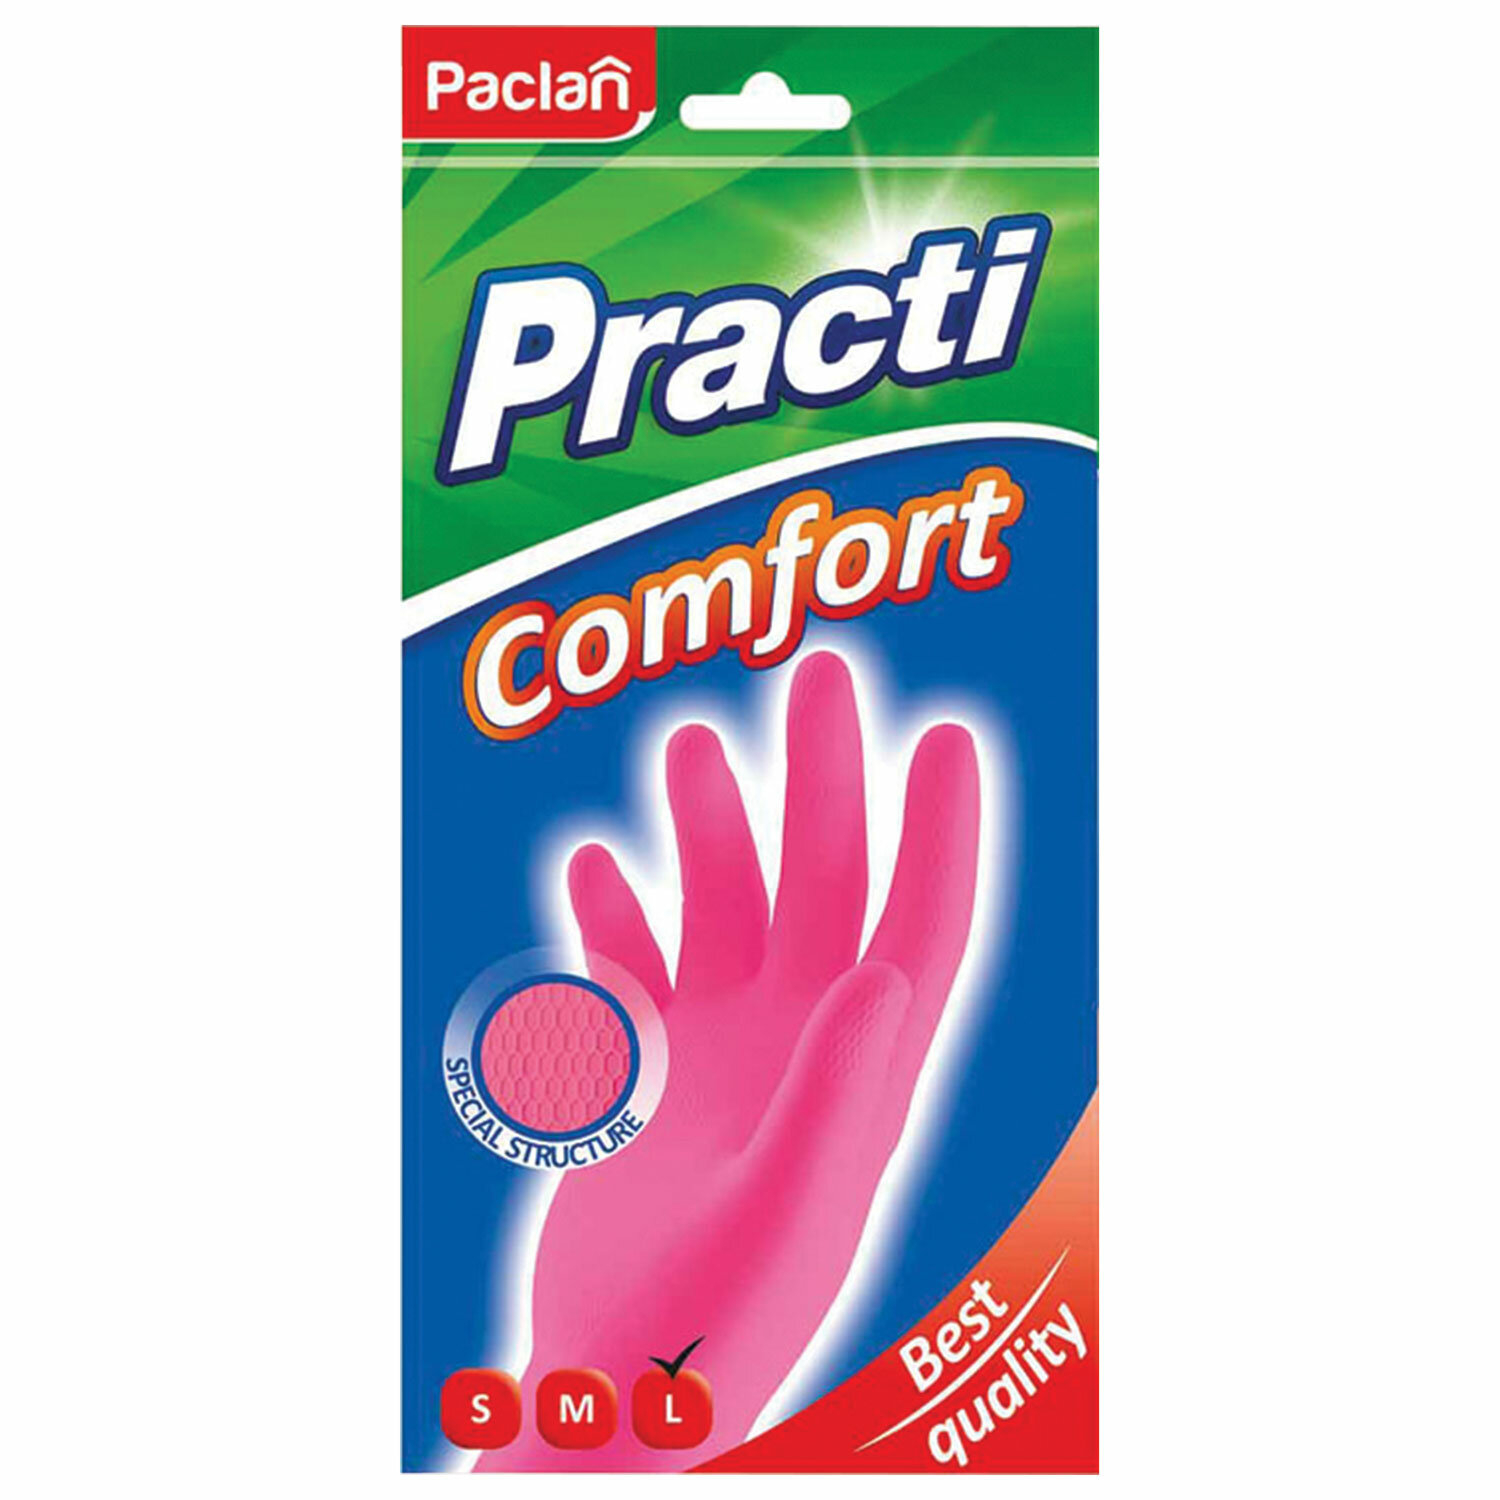 Перчатки резиновые Paclan extra dry размер L 1 пара в ассортименте перчатки резиновые paclan с ароматом лимона l